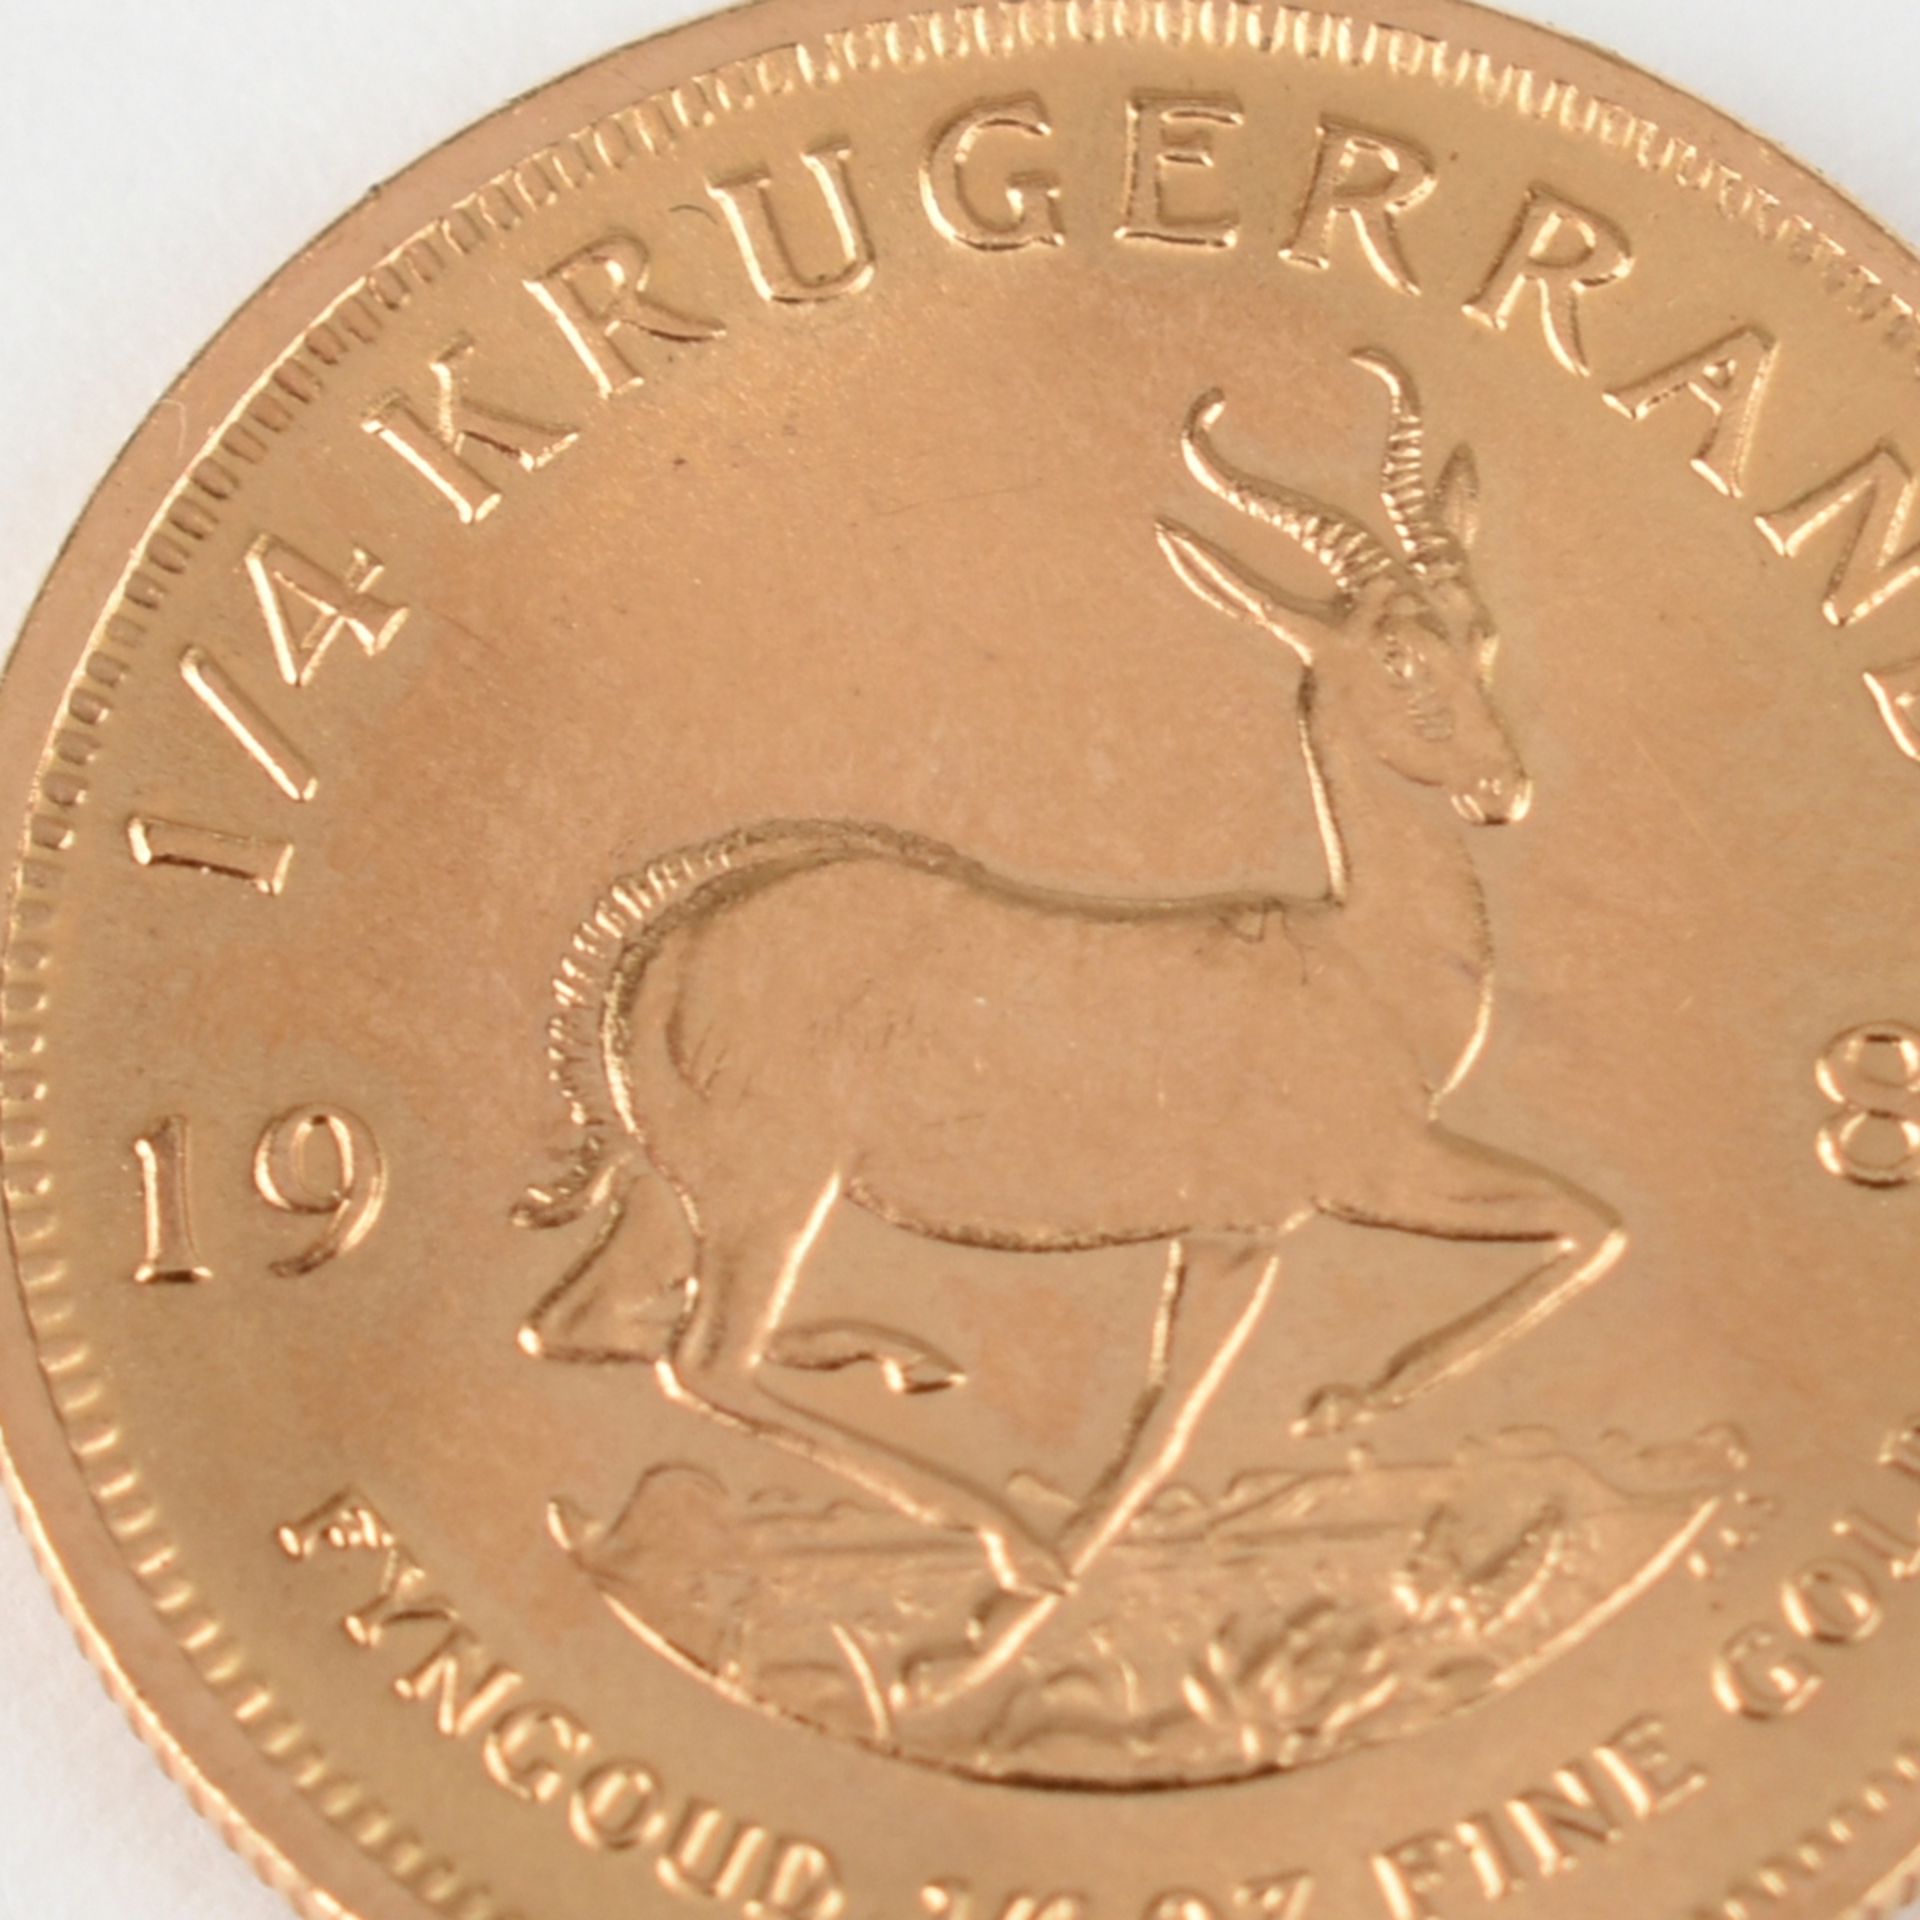 Goldmünze Südafrika 1982 Krügerrand, 1/4 oz in Gold, 916/1000, 8,482 g, D ca. 22 mm, av. Paul Kruger